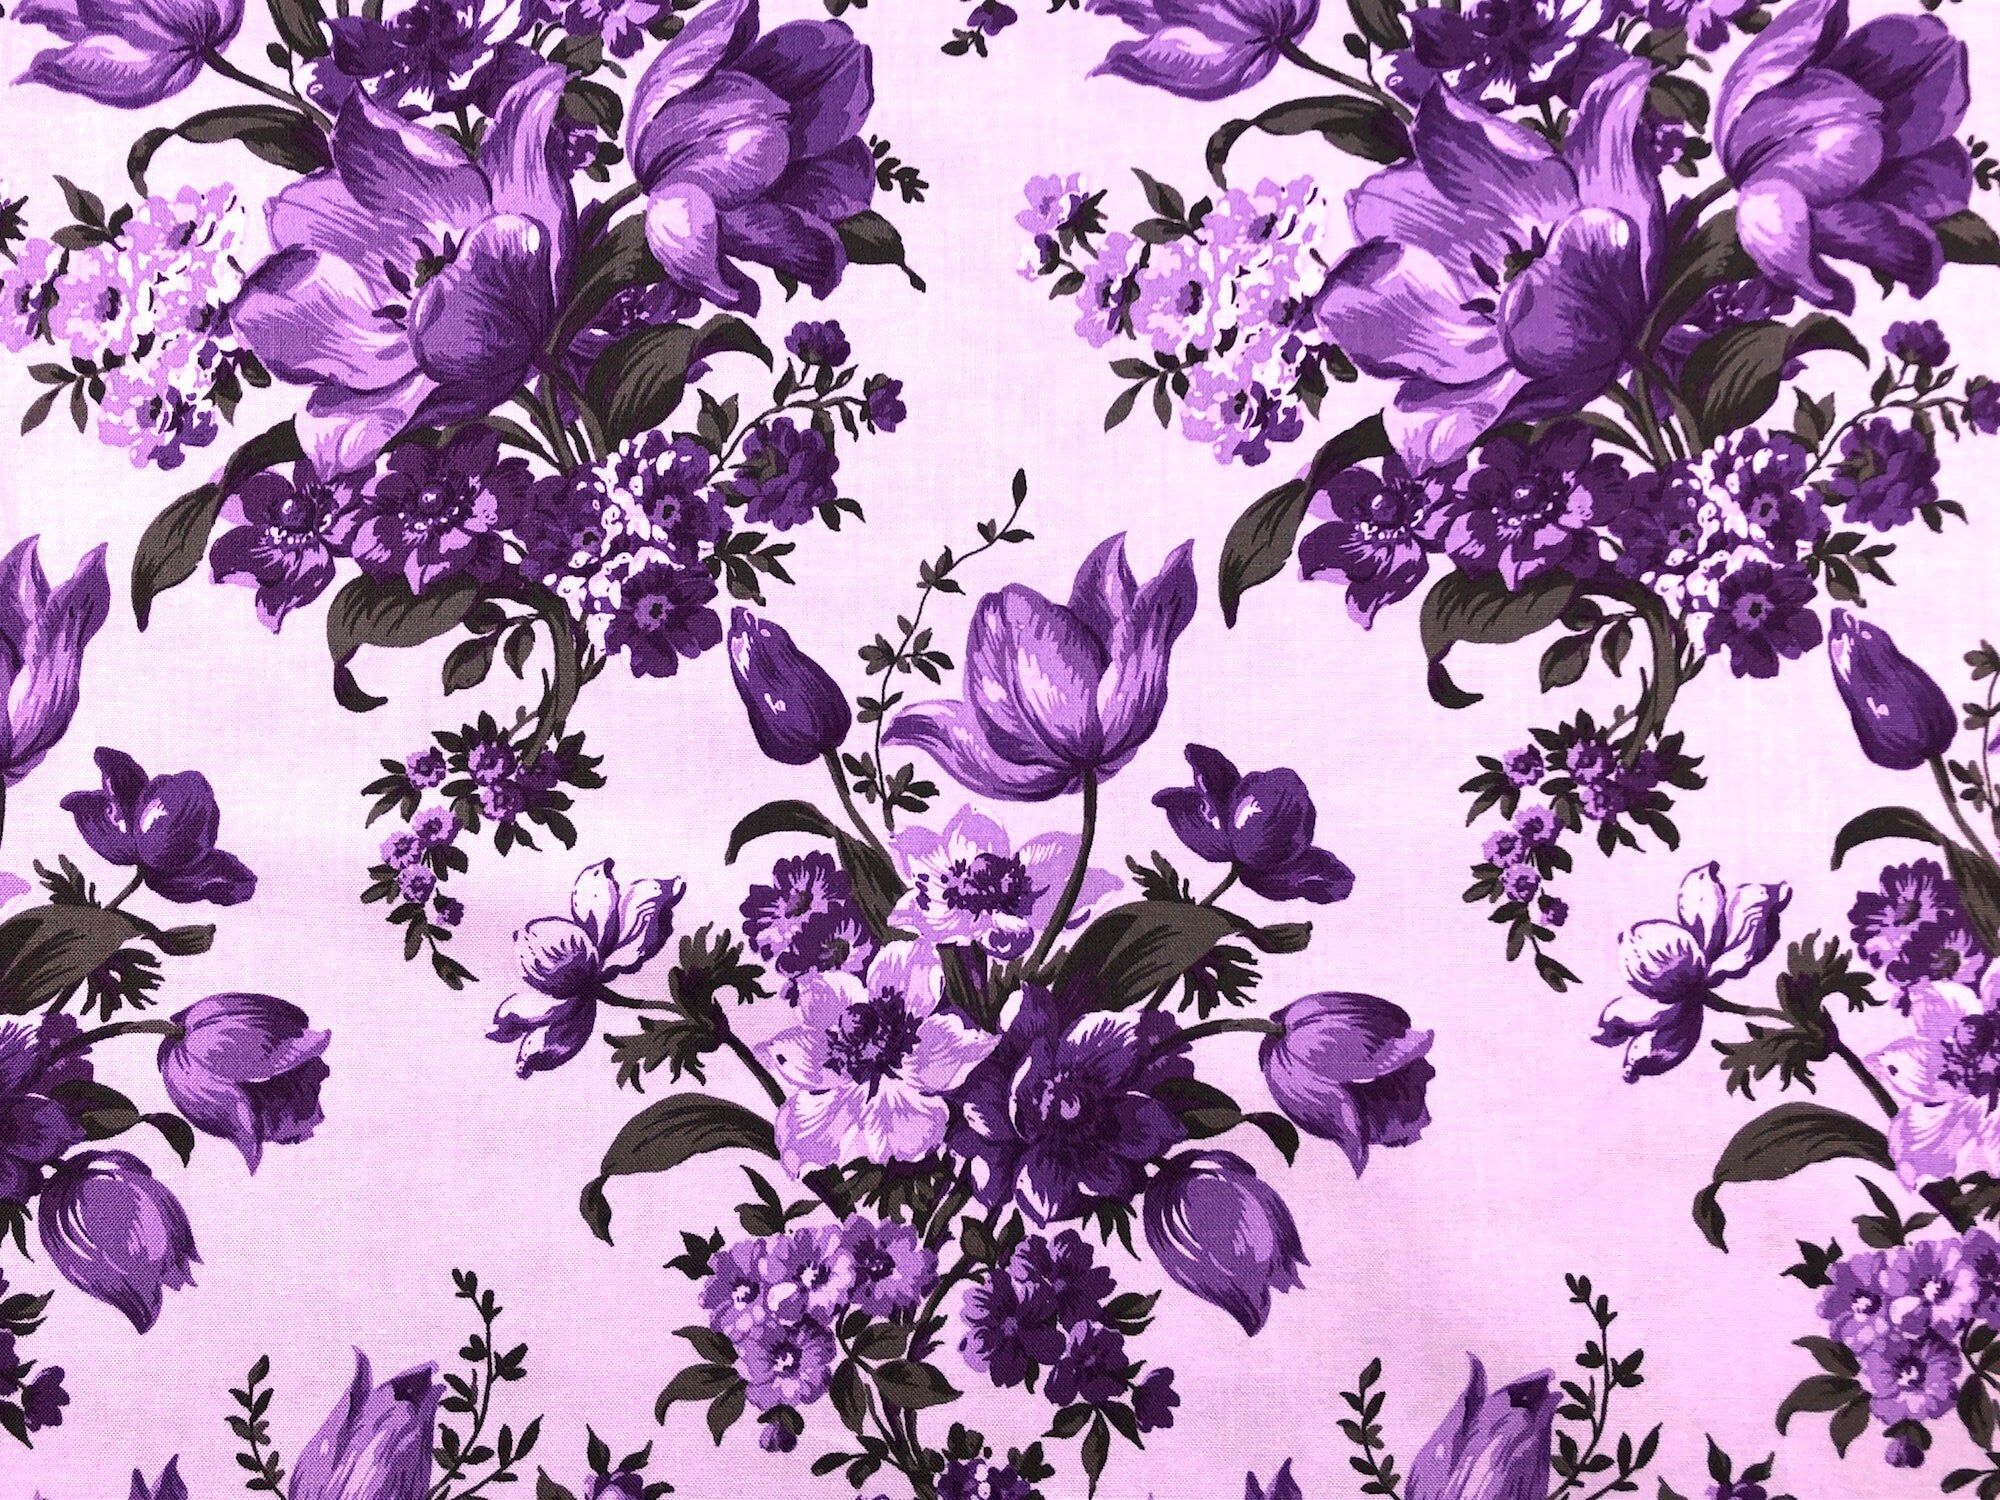 Close up of purple flowers.